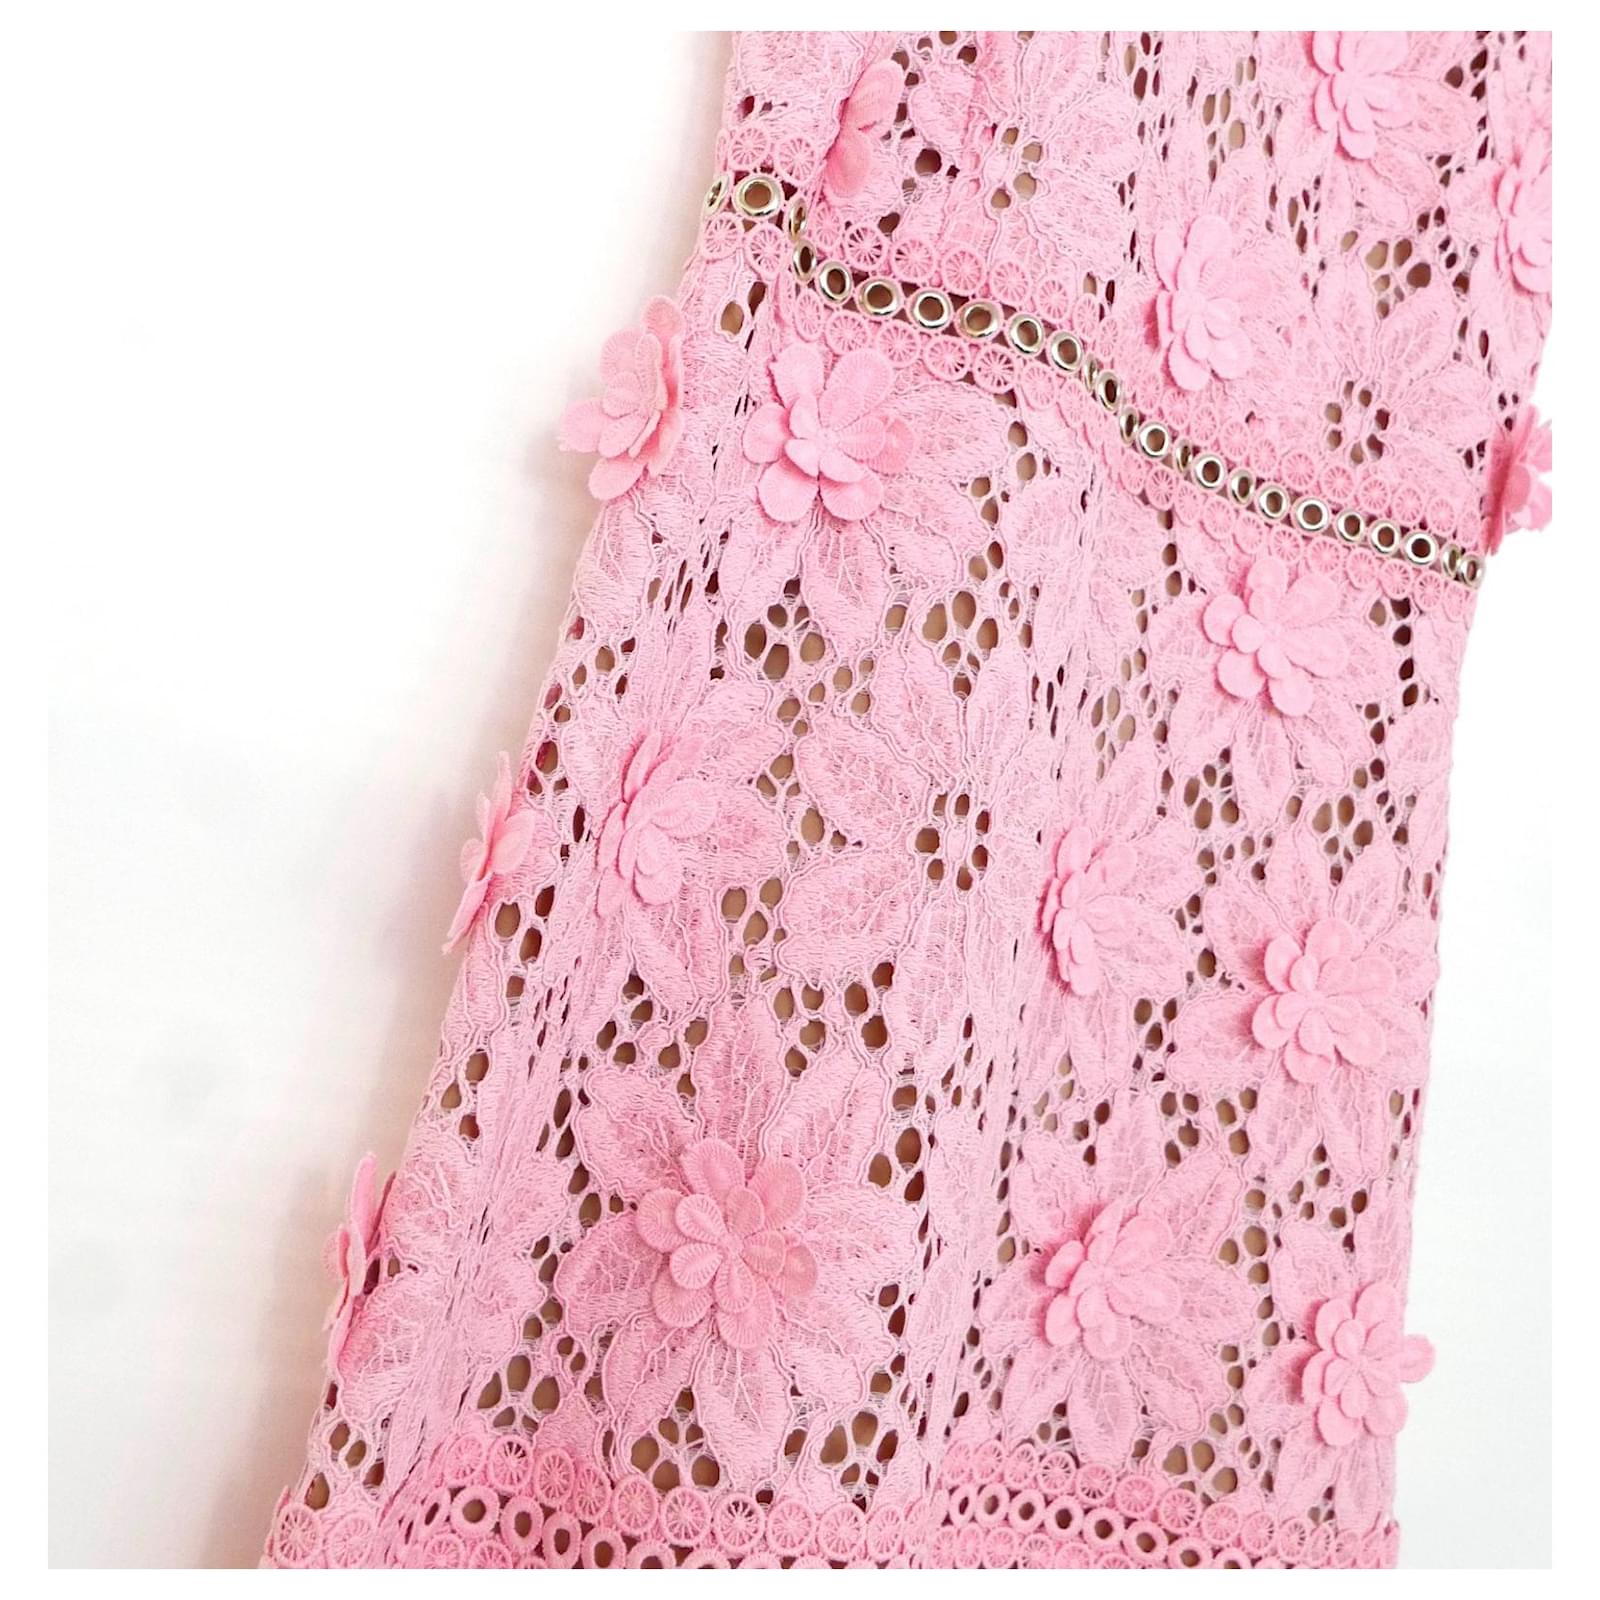 MICHAEL KORS dress for woman  Pink  Michael Kors dress MS280Y22GJ online  on GIGLIOCOM